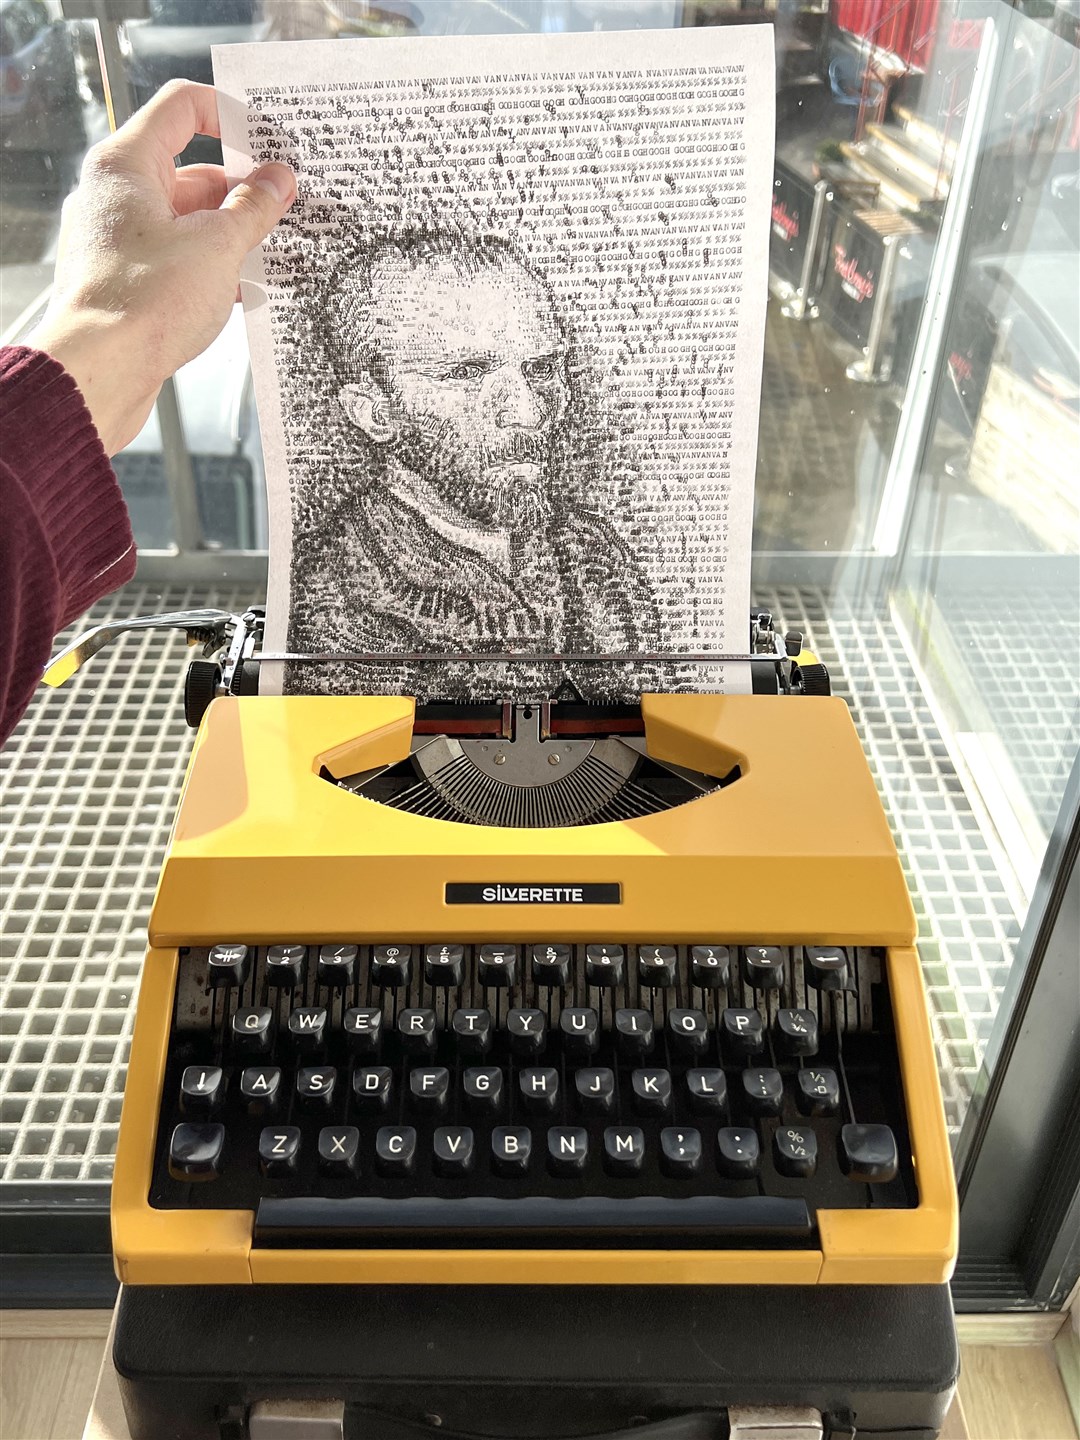 Van Gogh Self Portrait on a 1970s Silverette Typewriter 02 (James Cook)